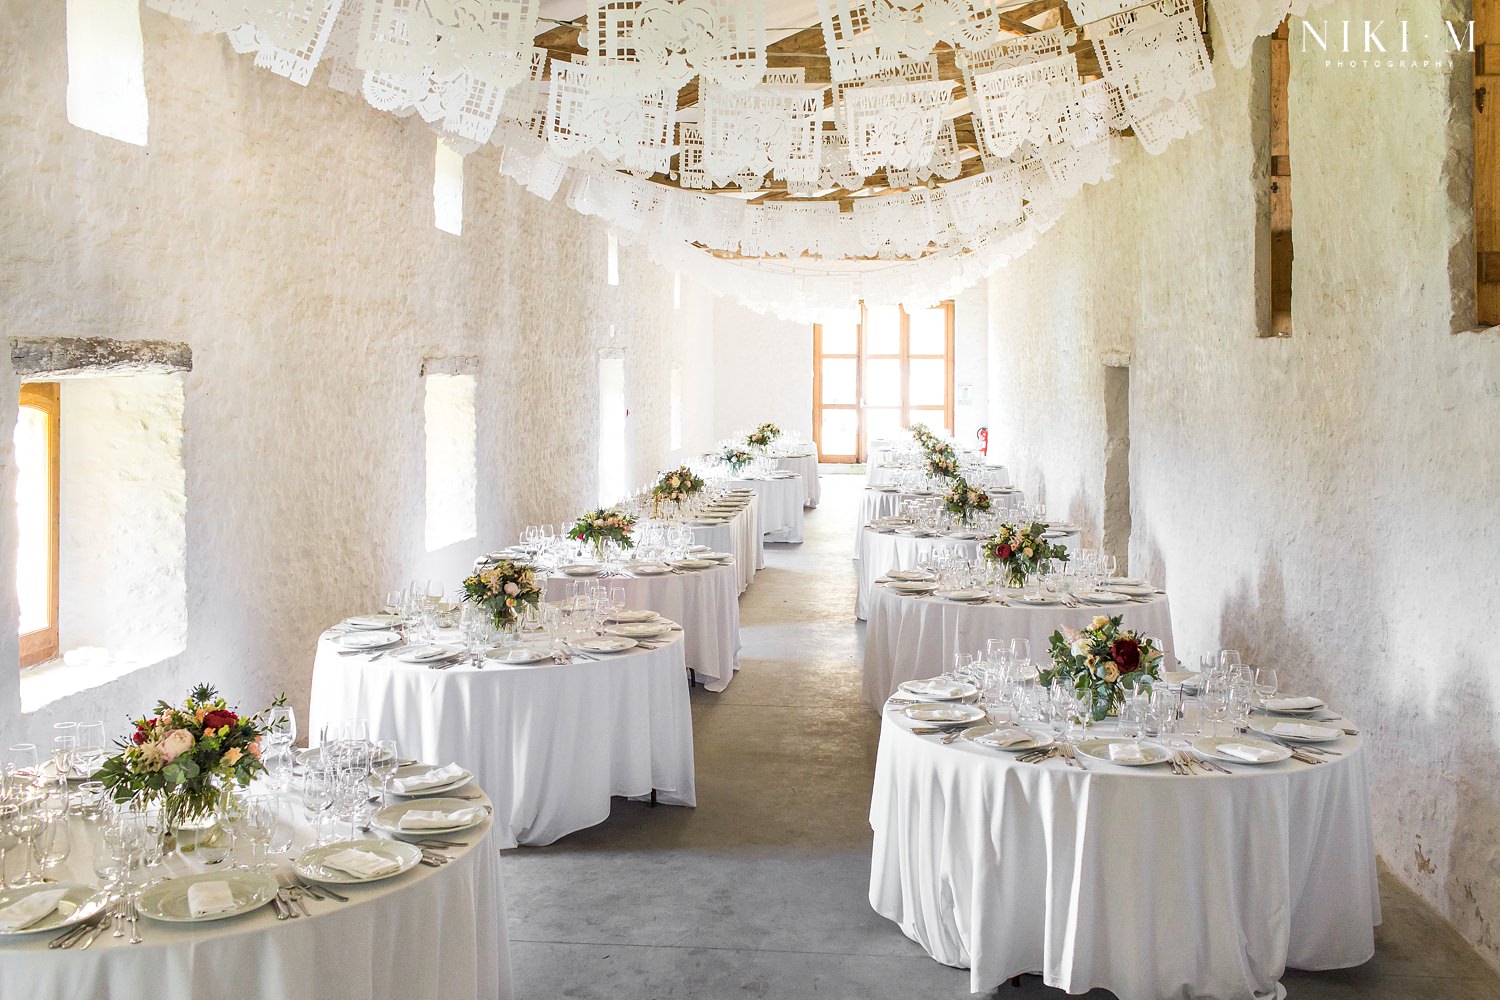 Wedding reception hall at Chateau de la Bourlie for a Dordogne wedding